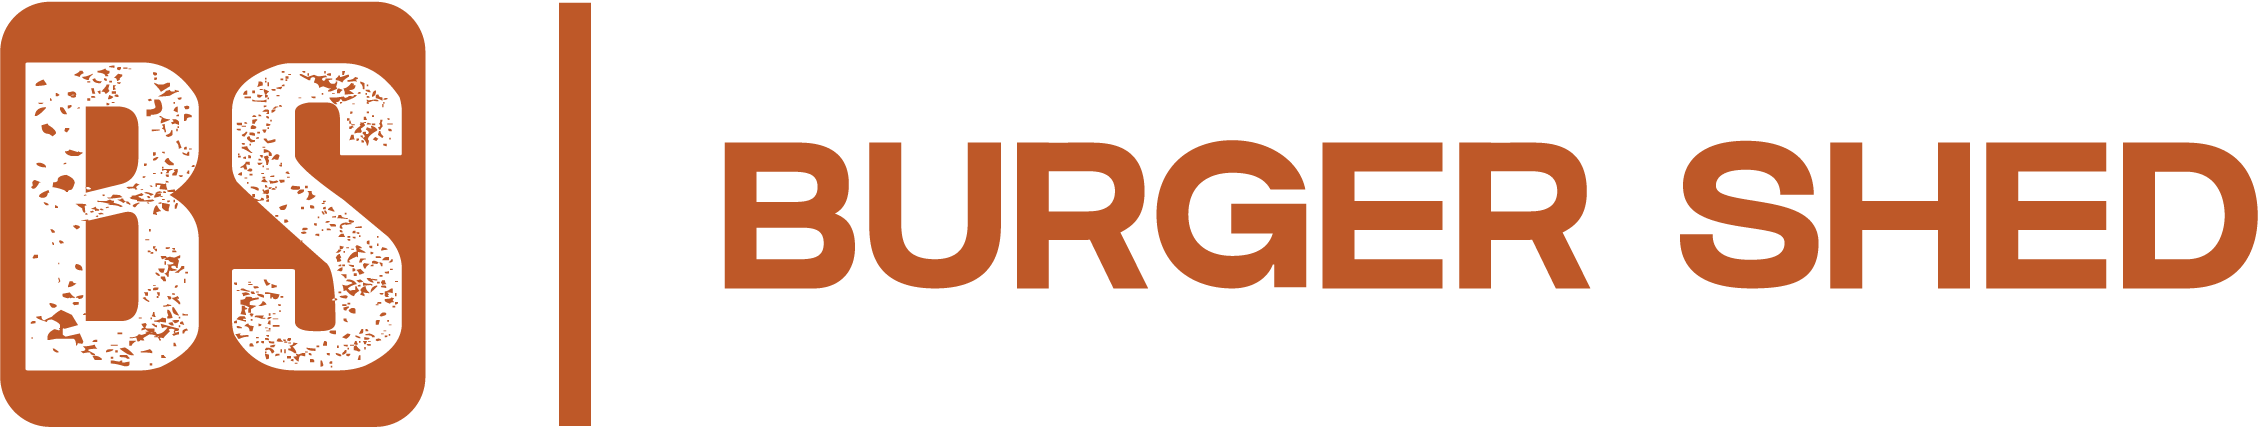 Burger shed logo